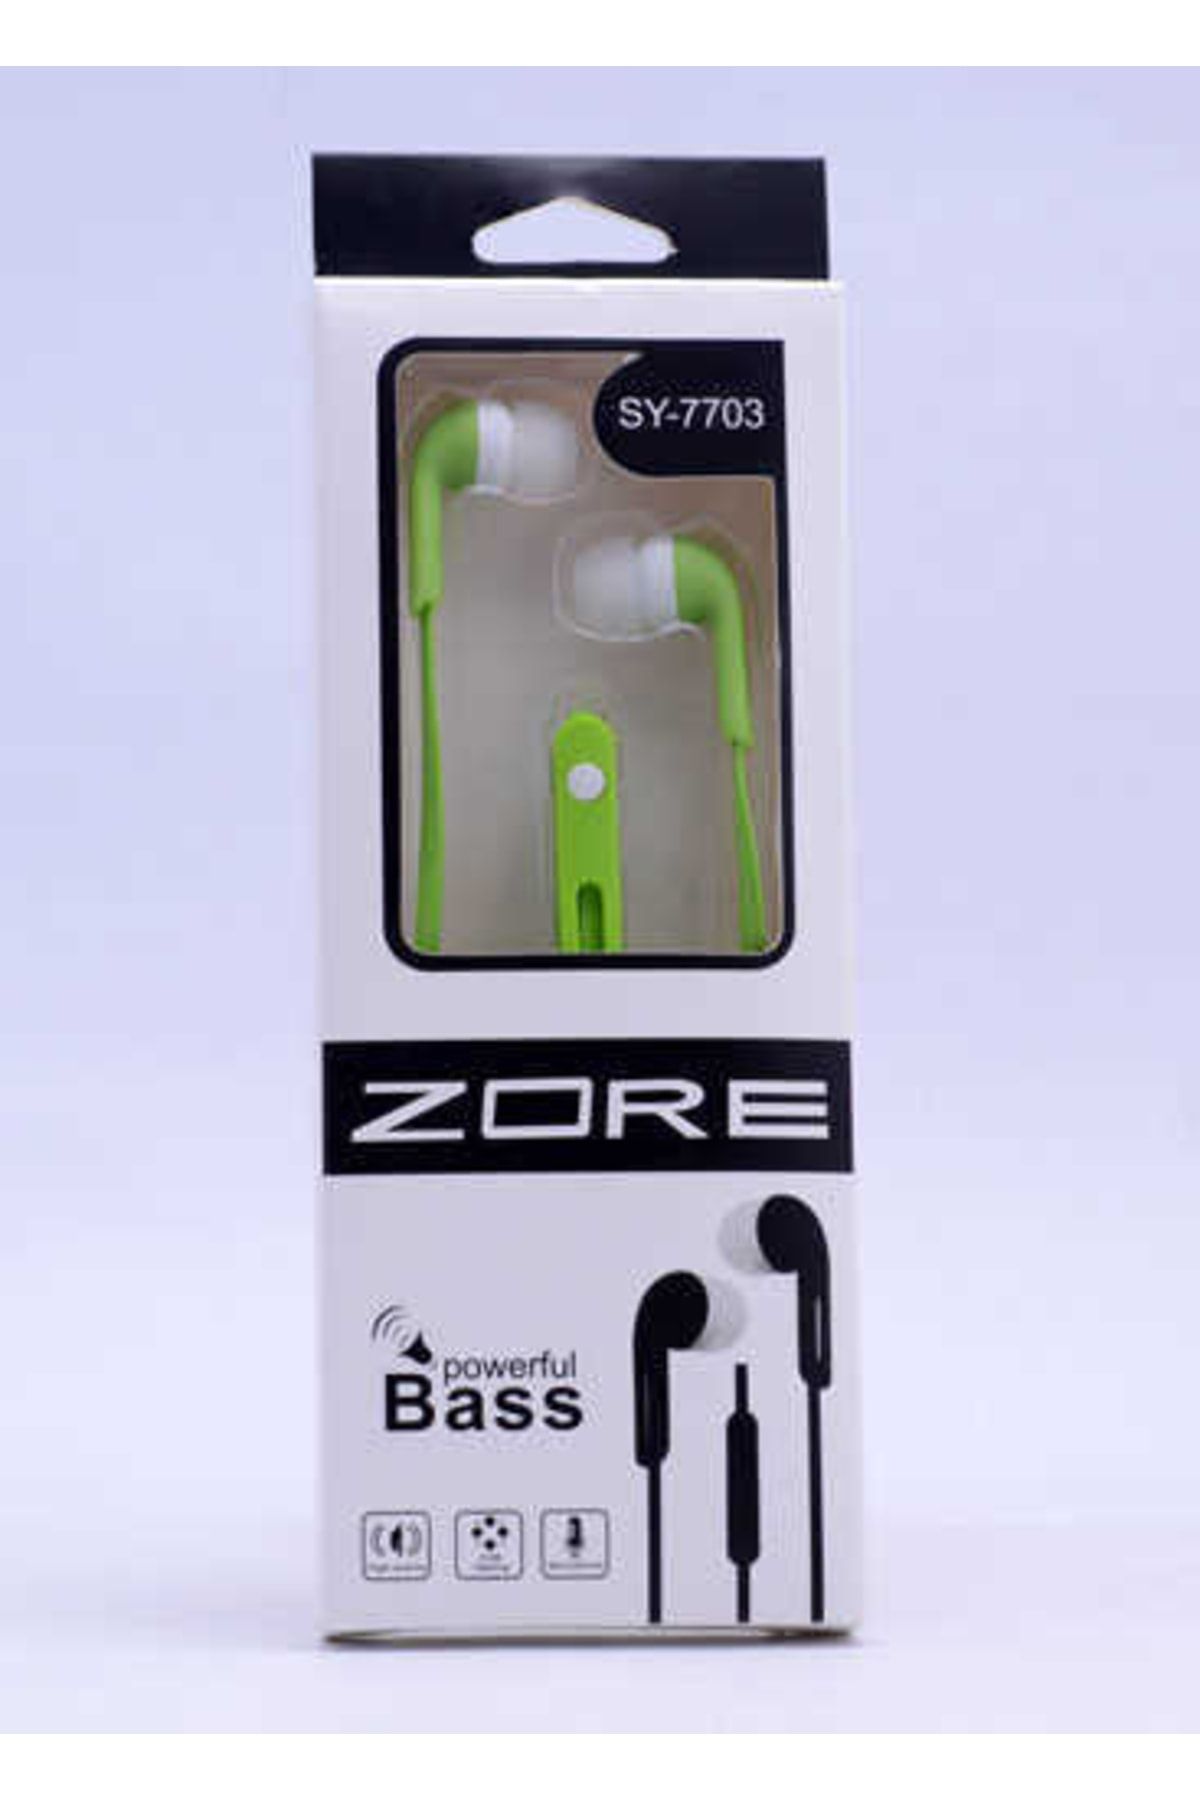 Genel Markalar Sy-7703 Mp3 Stereo Kulaklık Renk Yeşil